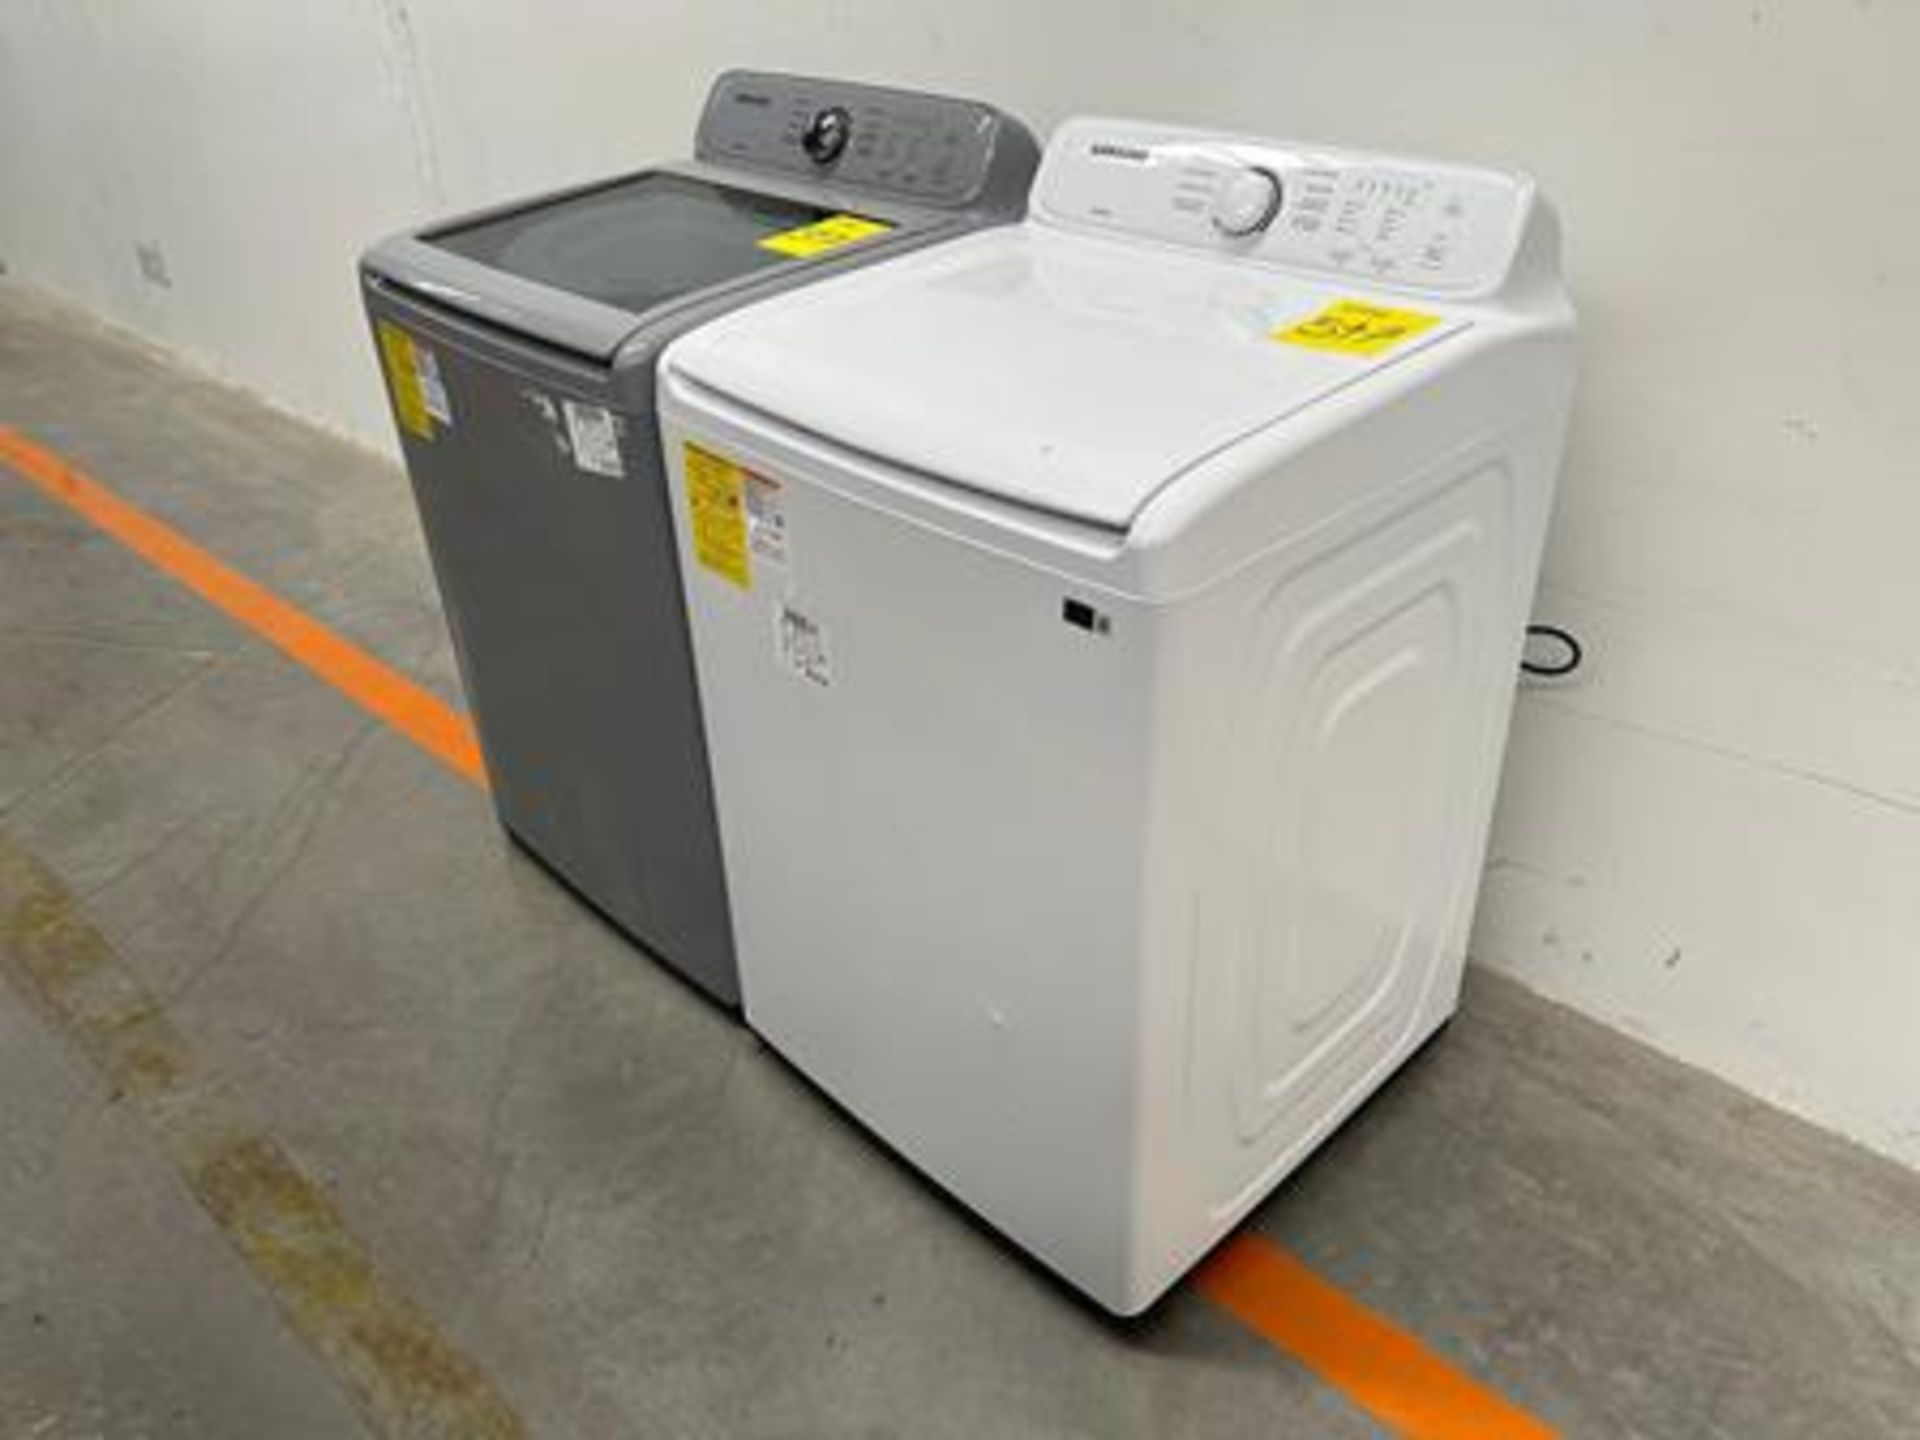 Lote de 2 lavadoras, Contiene: 1 lavadora de 21 Kg Marca LG, Modelo WT21VV6, Serie P2W506, Color NE - Image 2 of 9